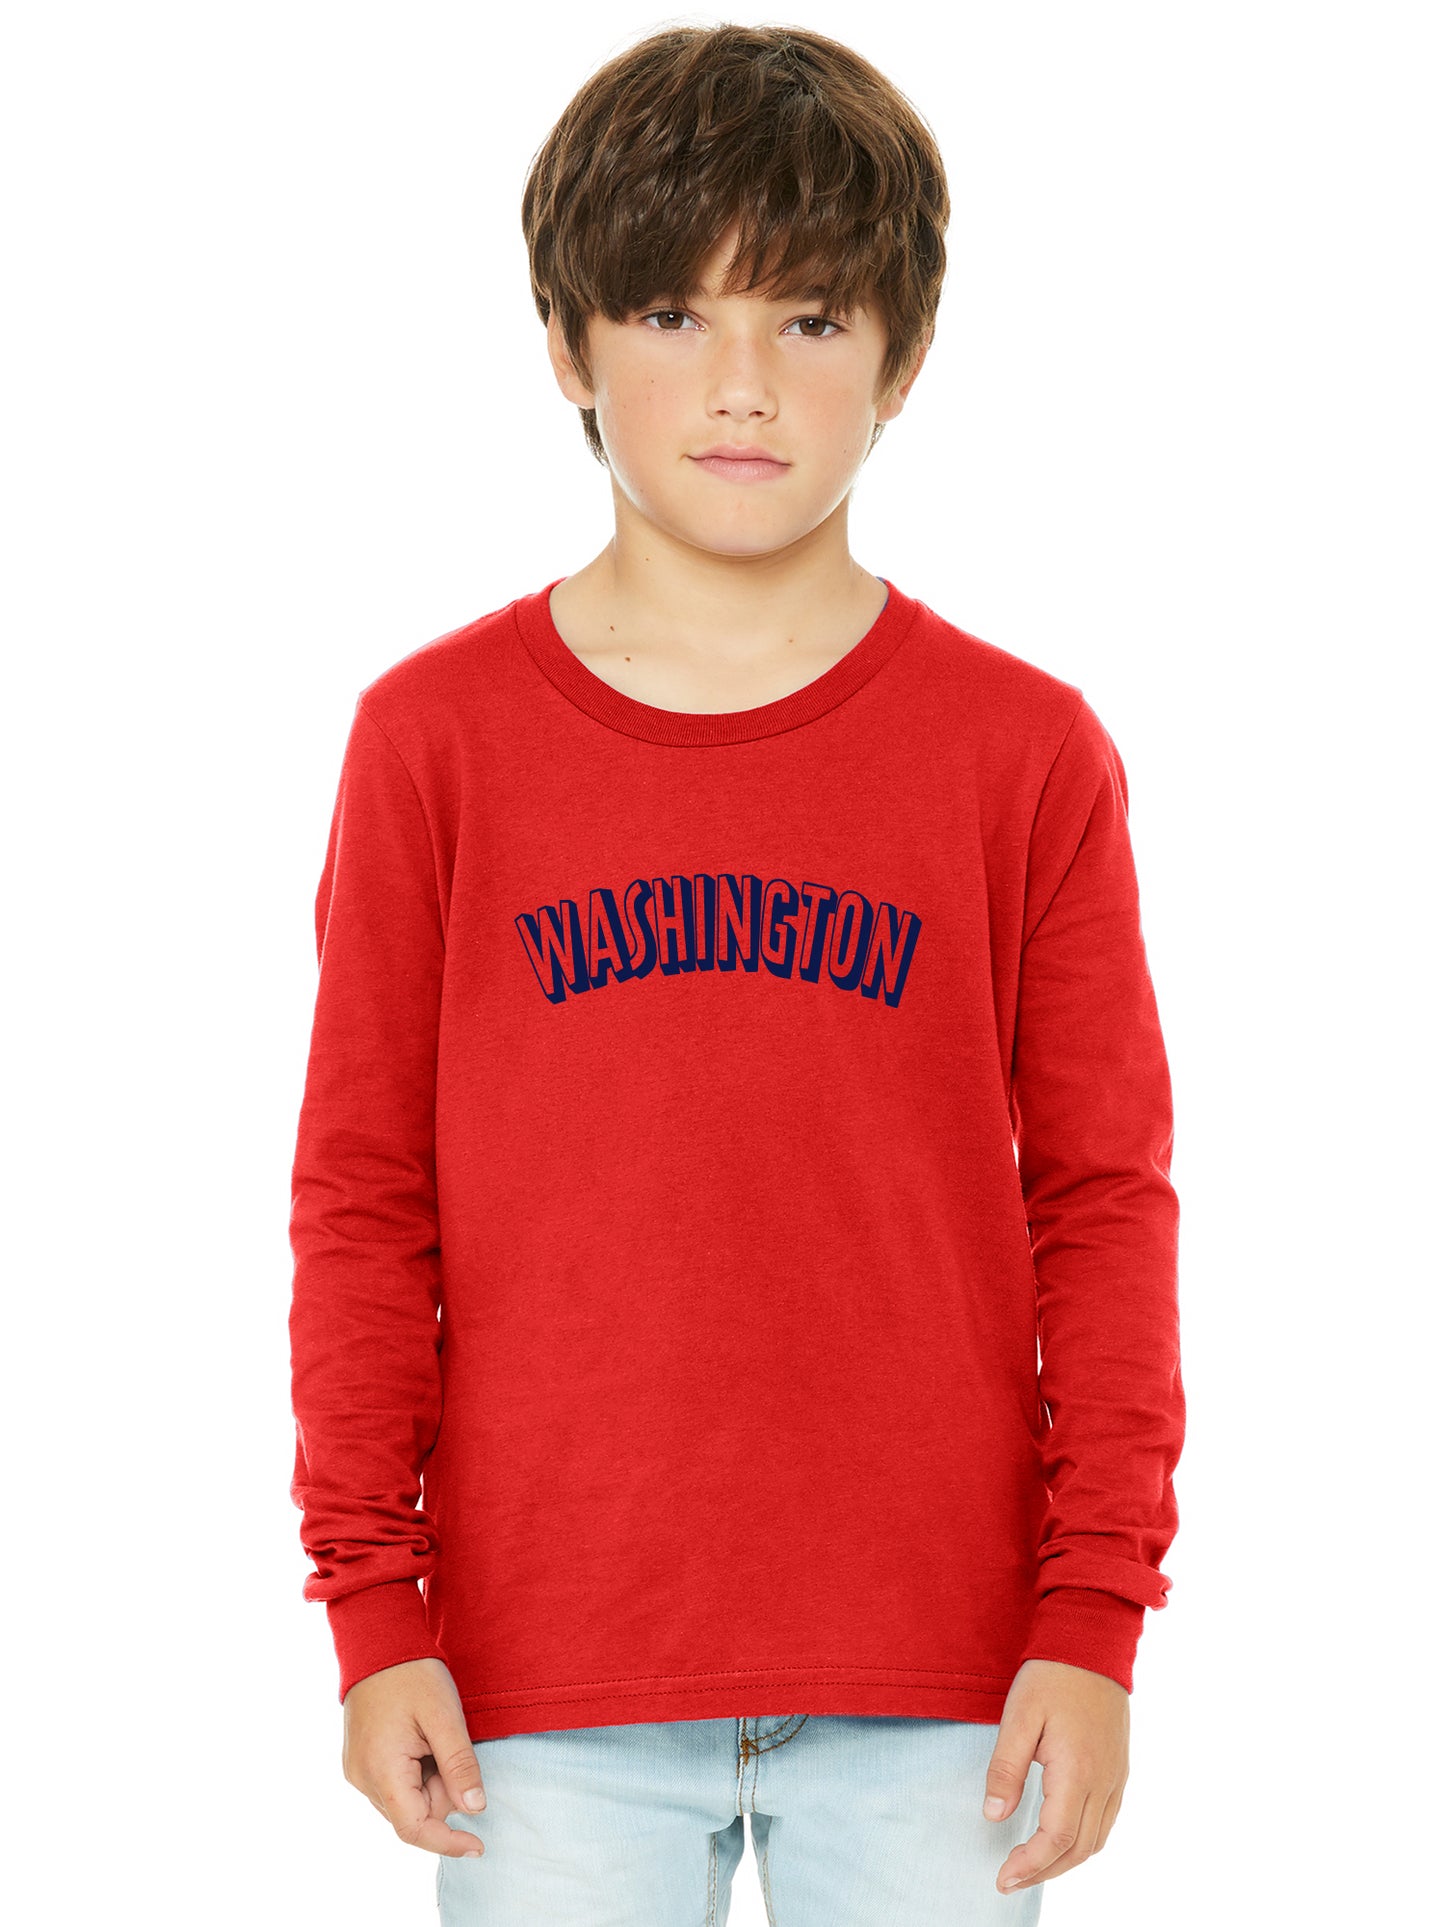 Daxton Youth Long Sleeve Washington Basic Tshirt